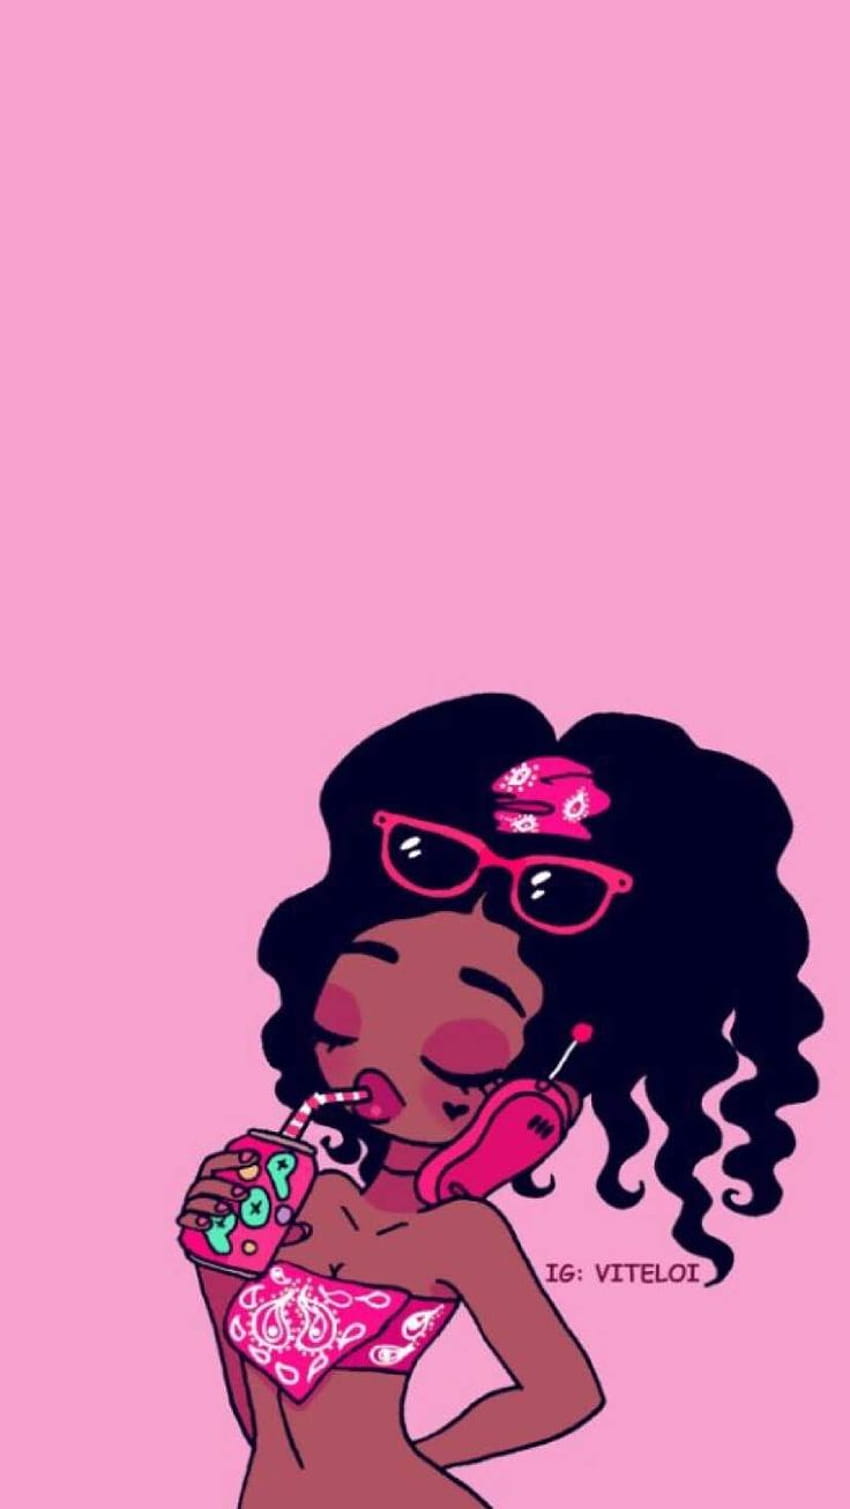 Caprice Brimmage on Tumblr stickers, pretty black girl cartoon HD phone wallpaper